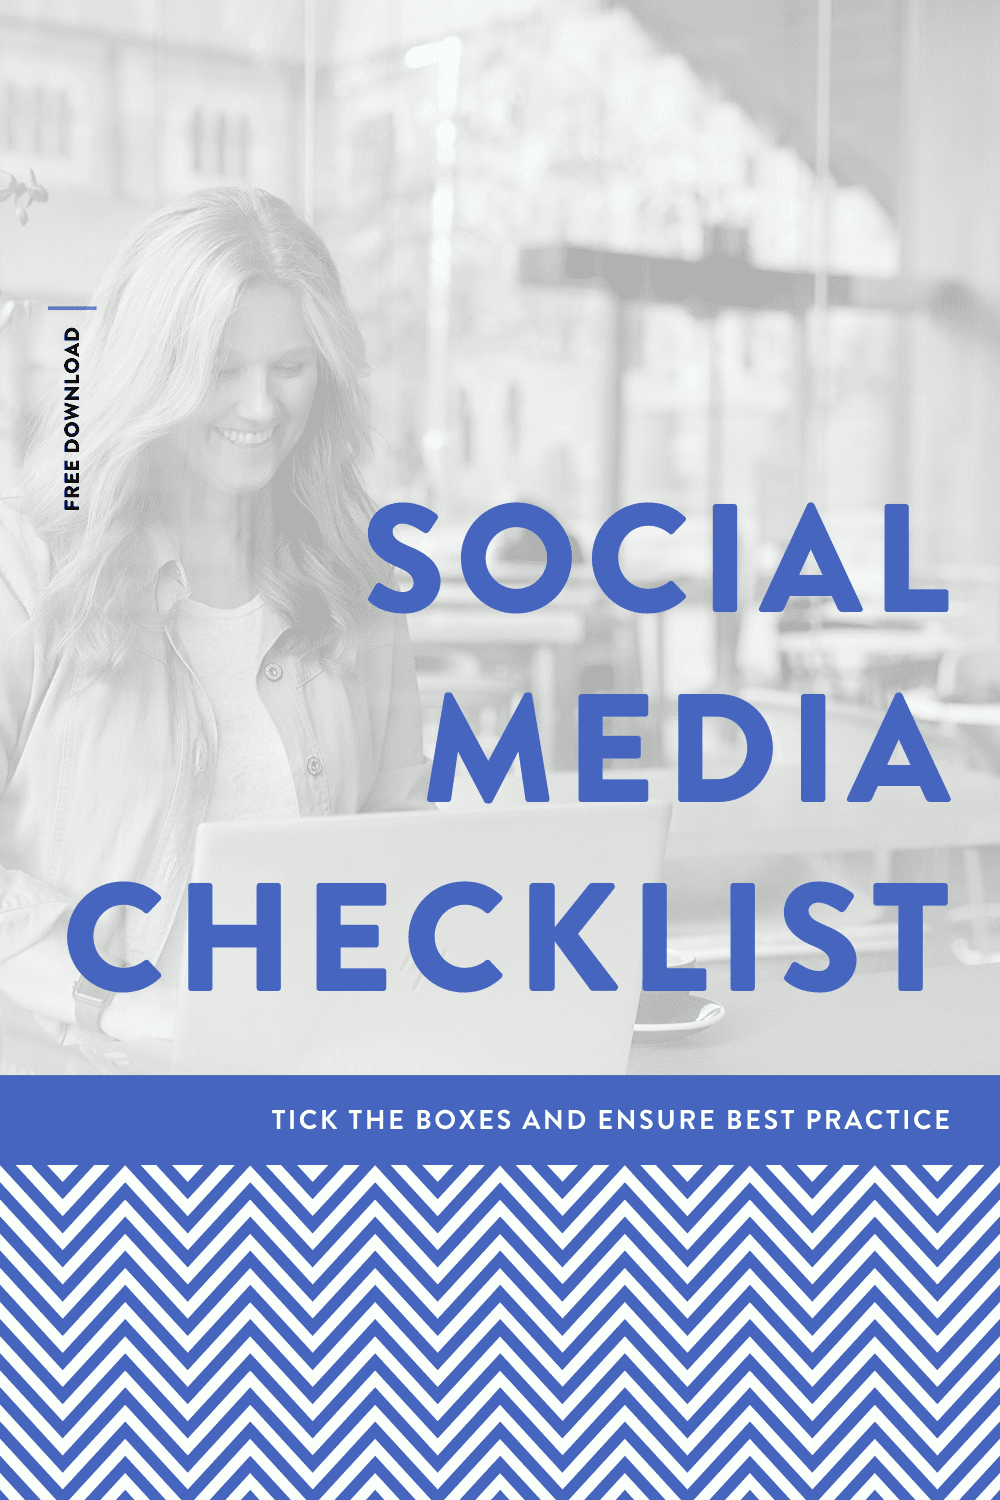 Social Media Checklist // FREE DOWNLOAD